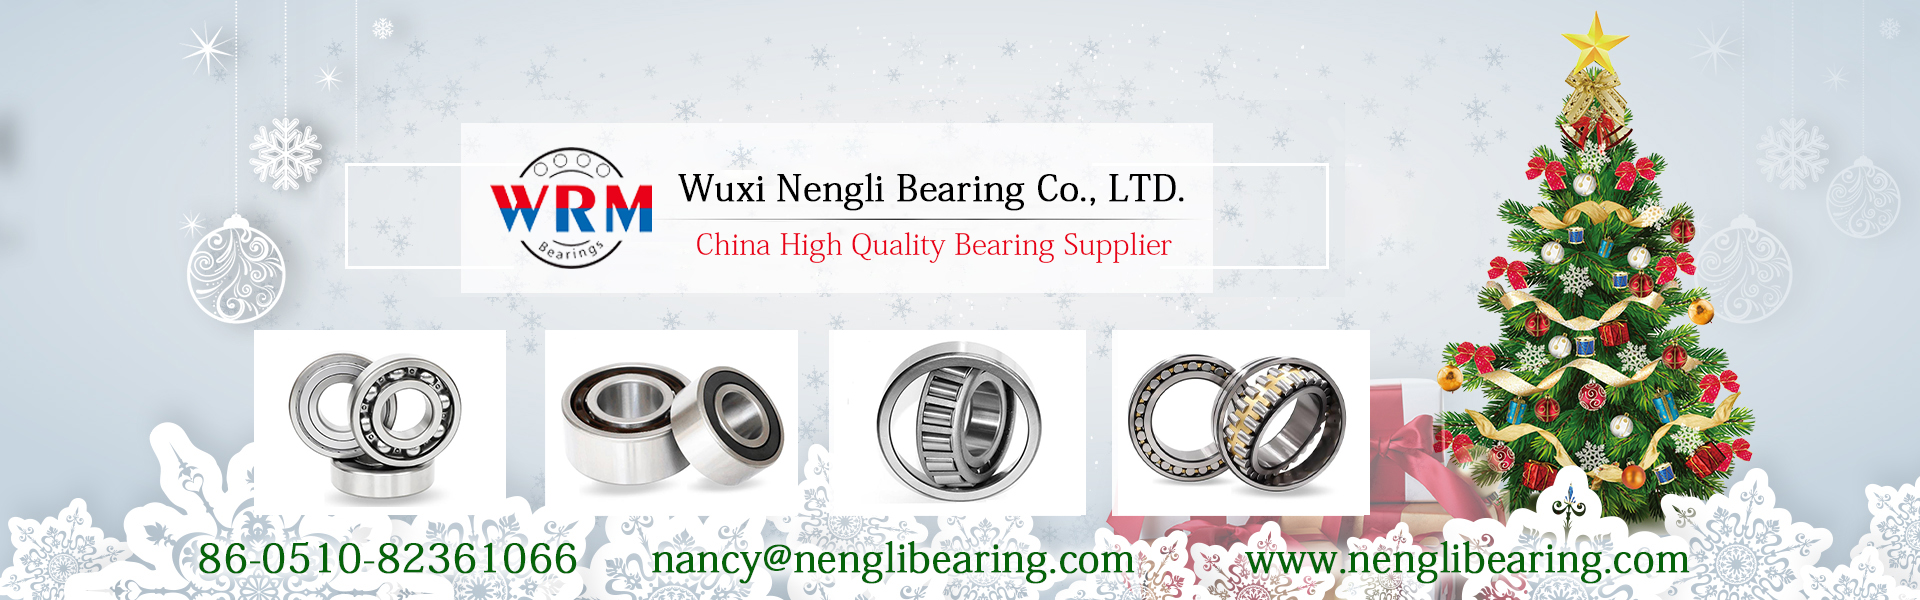 Celebrating Christmas with Wuxi Nengli Bearing Company: Spreading Joy and Quality Products